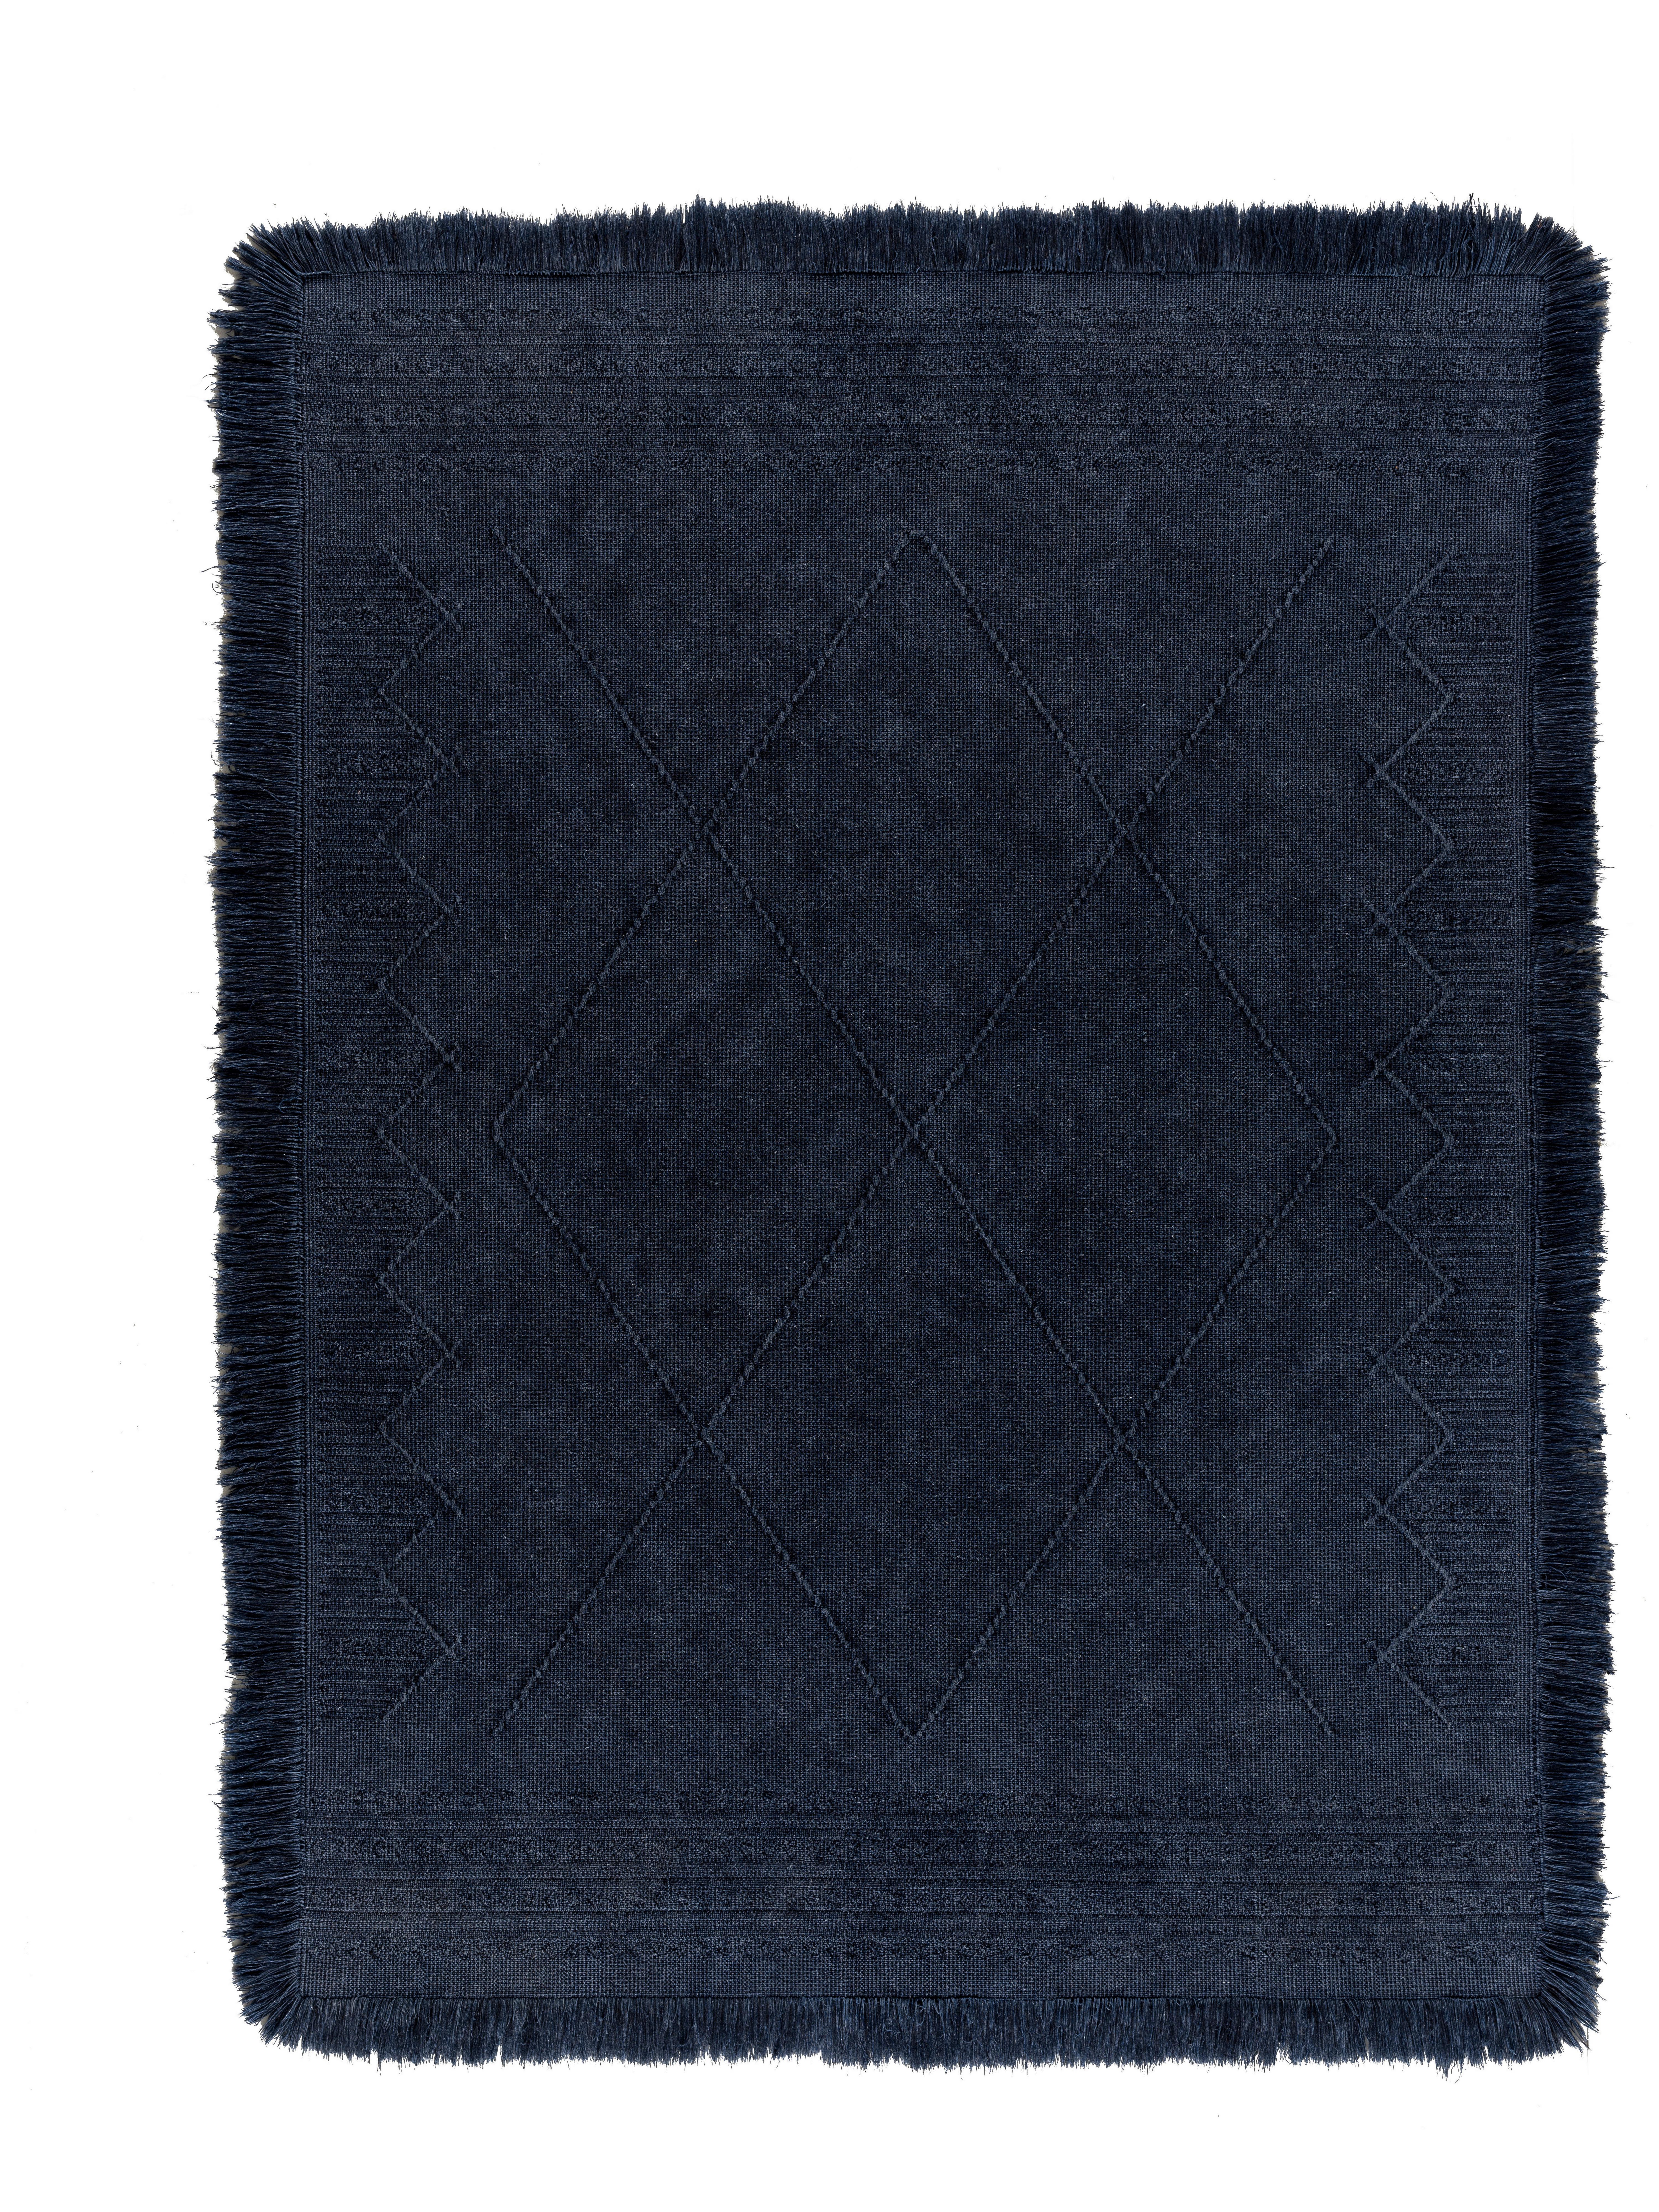 Ručně Tkaný Koberec Monaco 3, 160/230cm - tmavě modrá, textil (160/230cm) - Modern Living